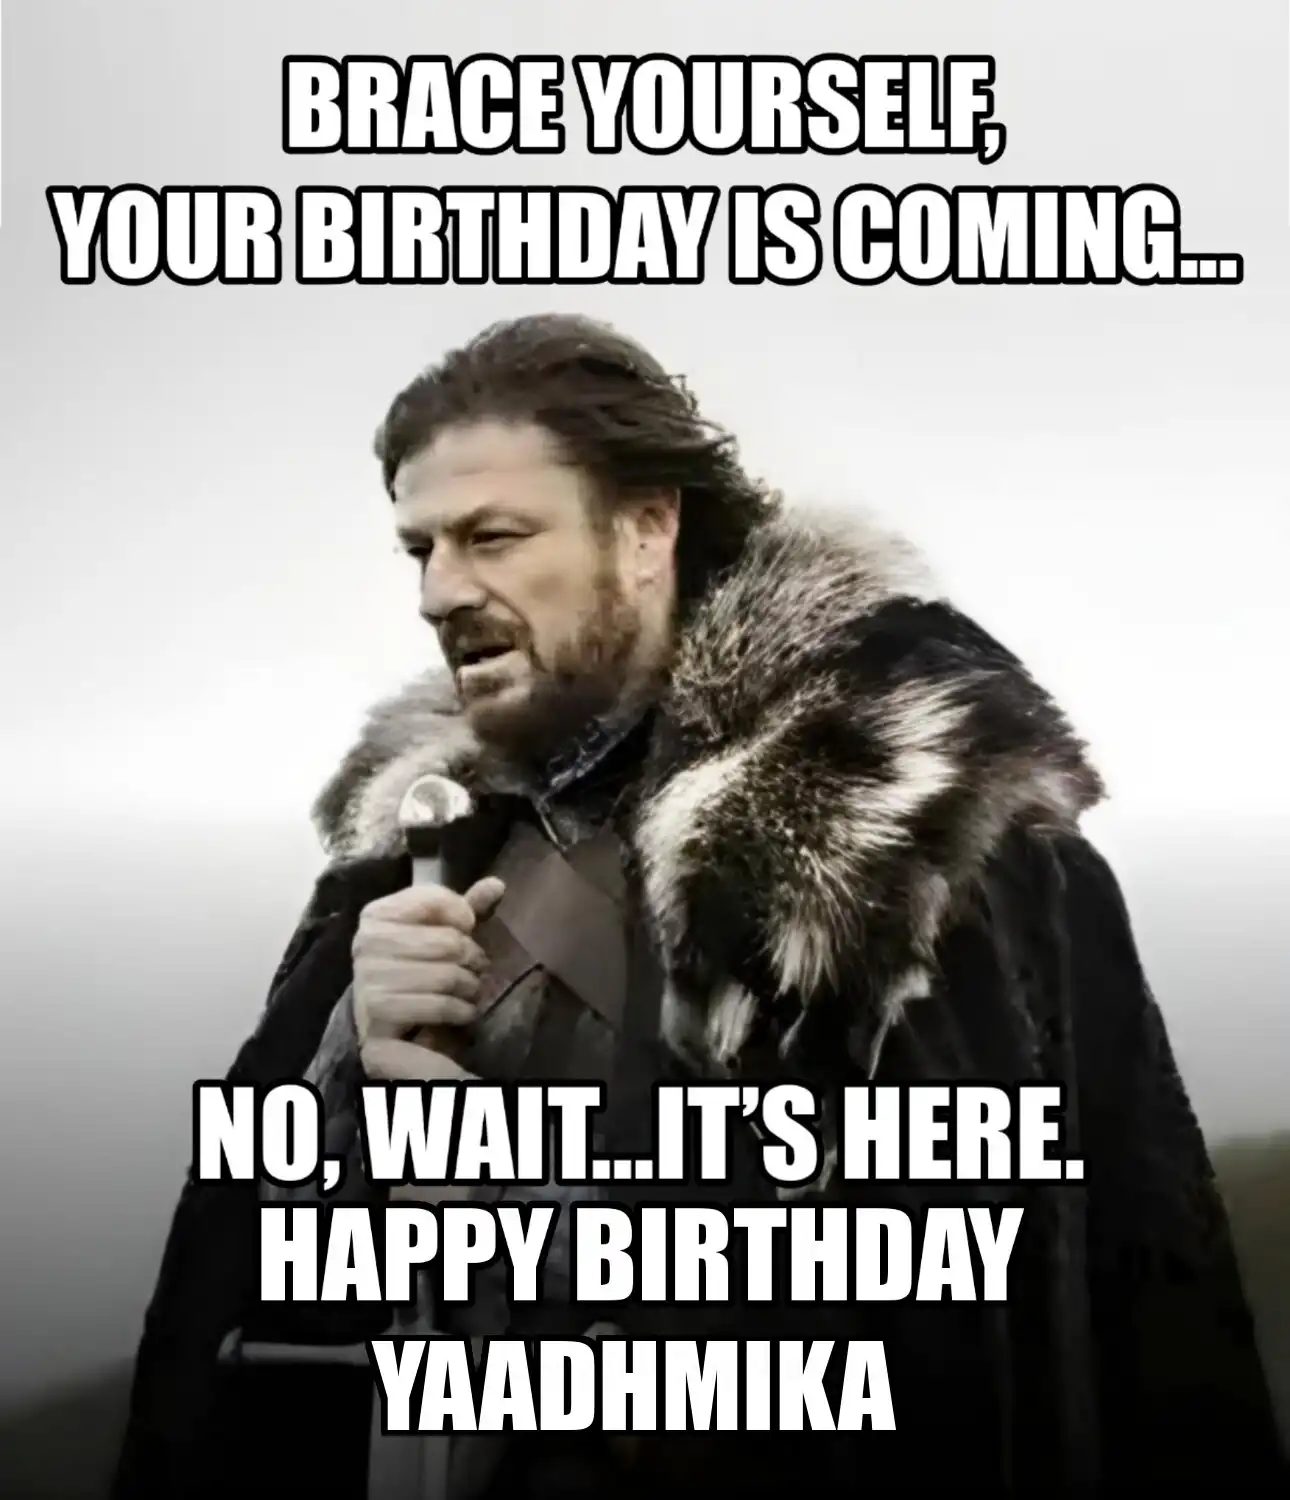 Happy Birthday Yaadhmika Brace Yourself Your Birthday Is Coming Meme